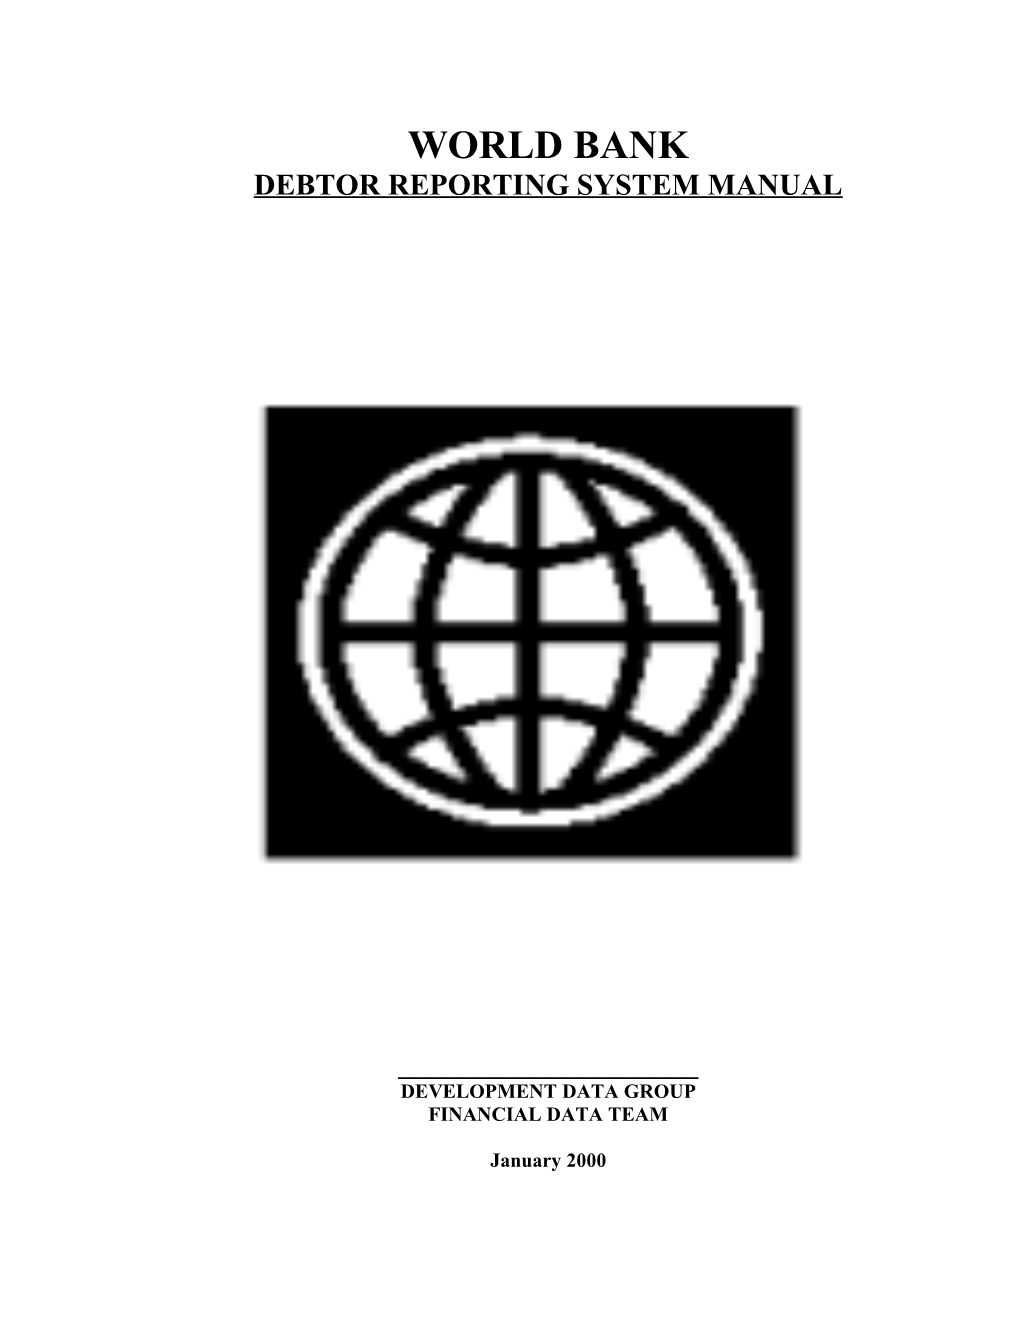 World Bank Debtor Reporting System Manual